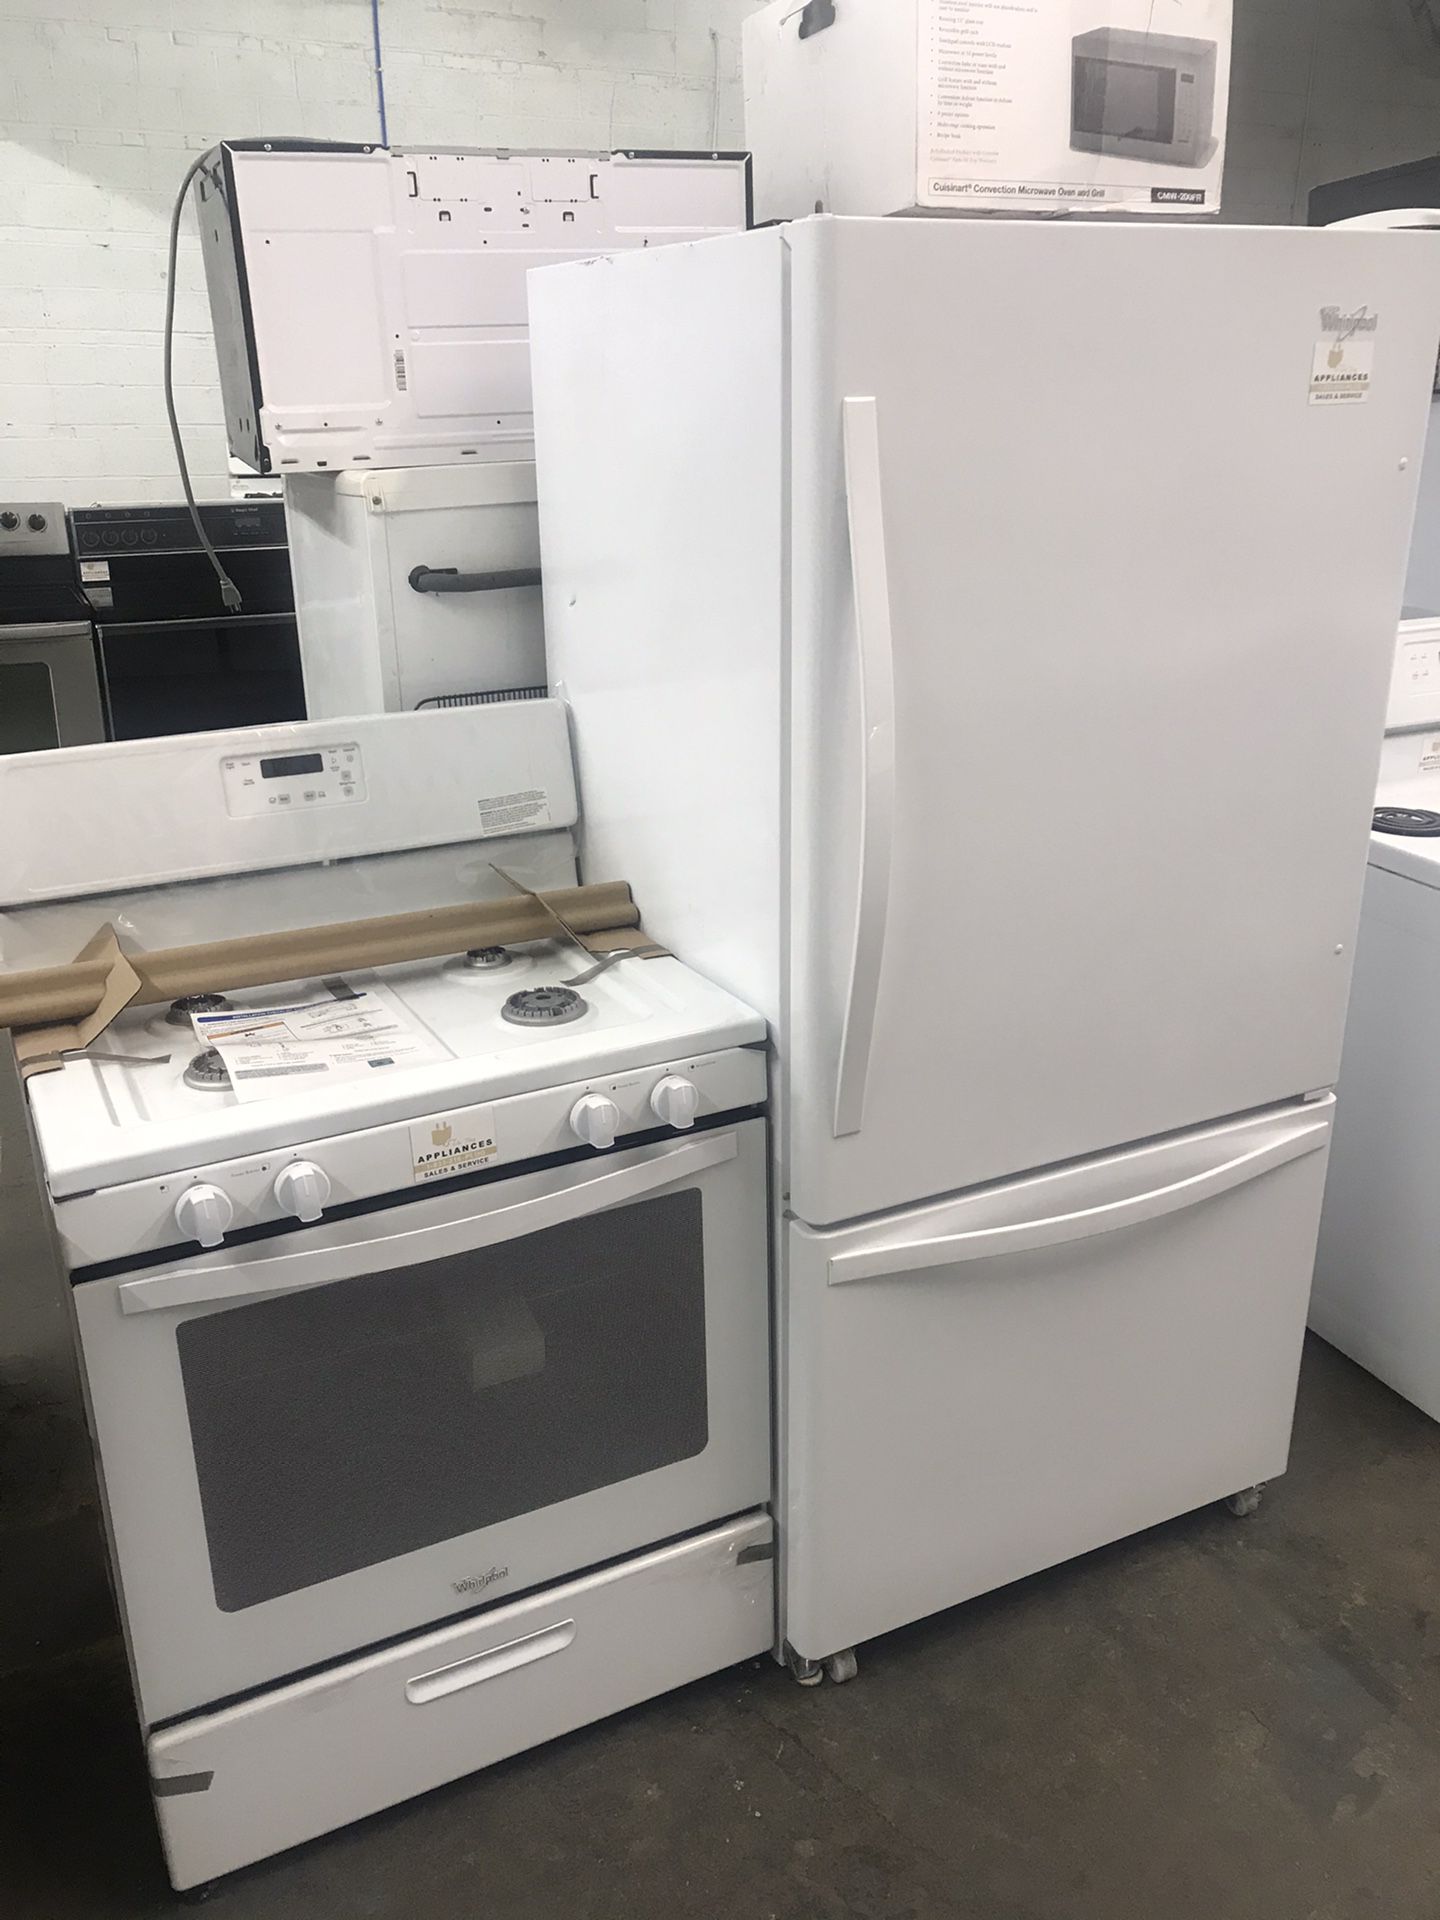 NEW Whirlpool stove and refrigerator set